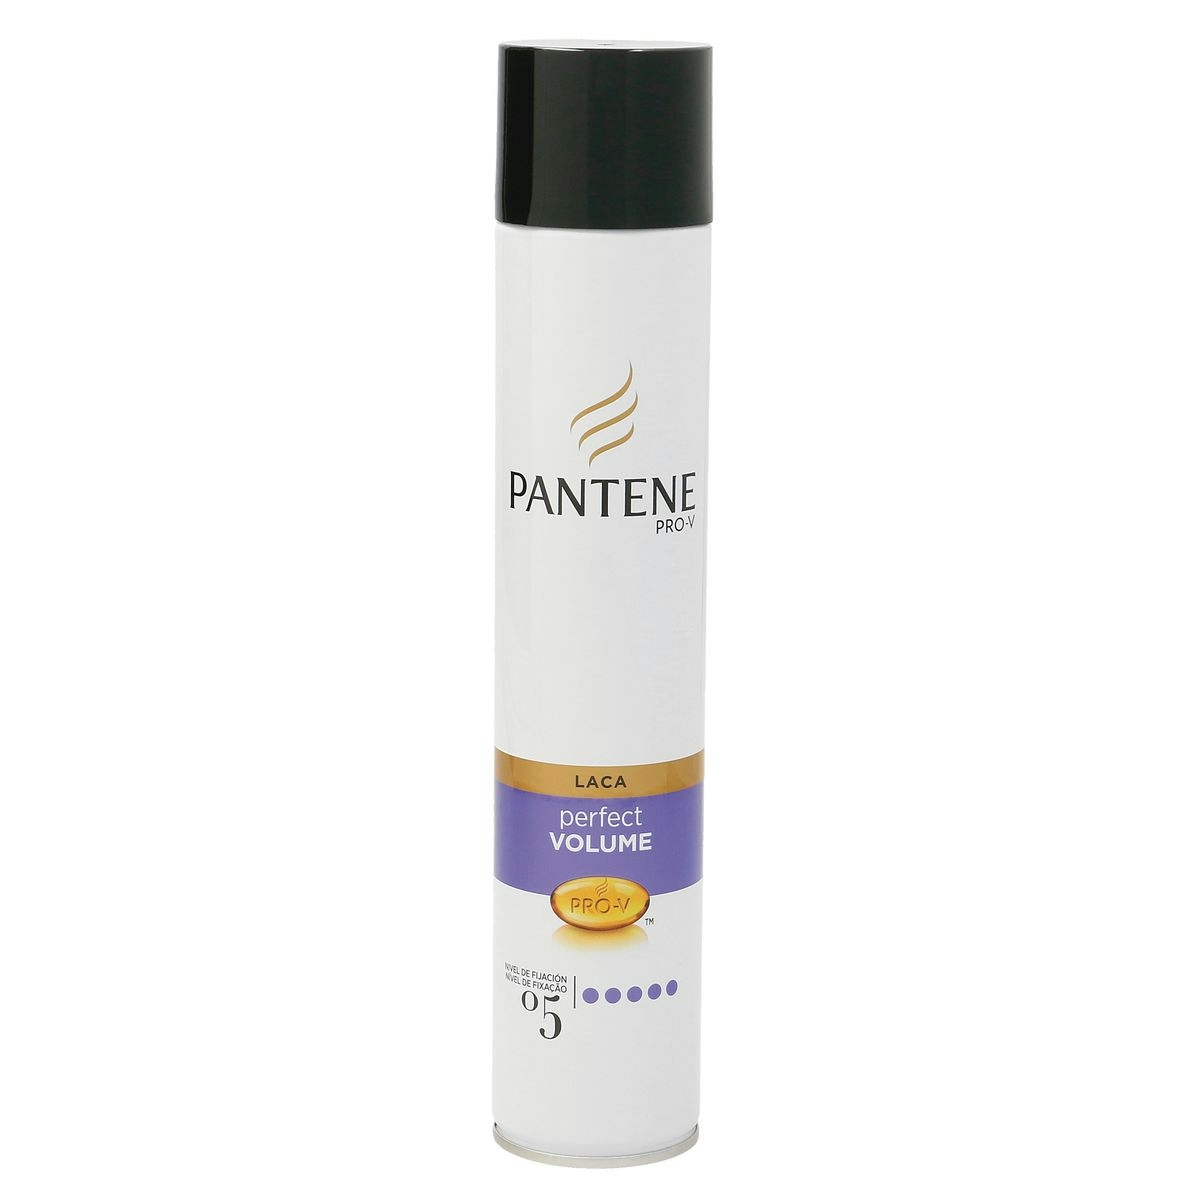 Laca volumen perfecto PANTENE Pro-V spray 300 ml